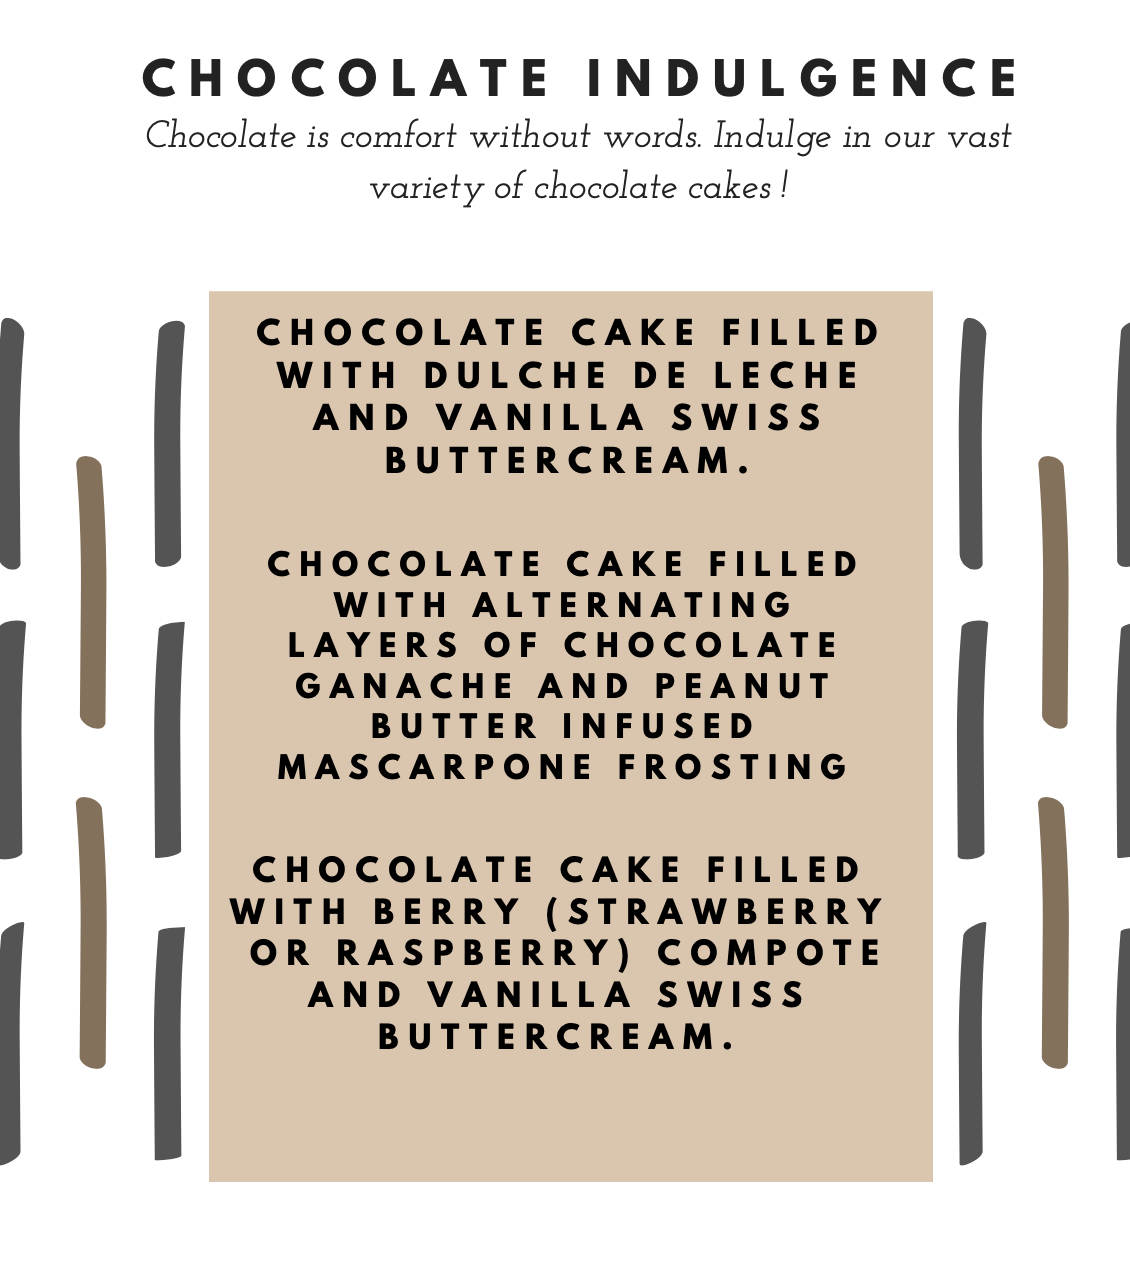 Chocolate Indulgence Flavours